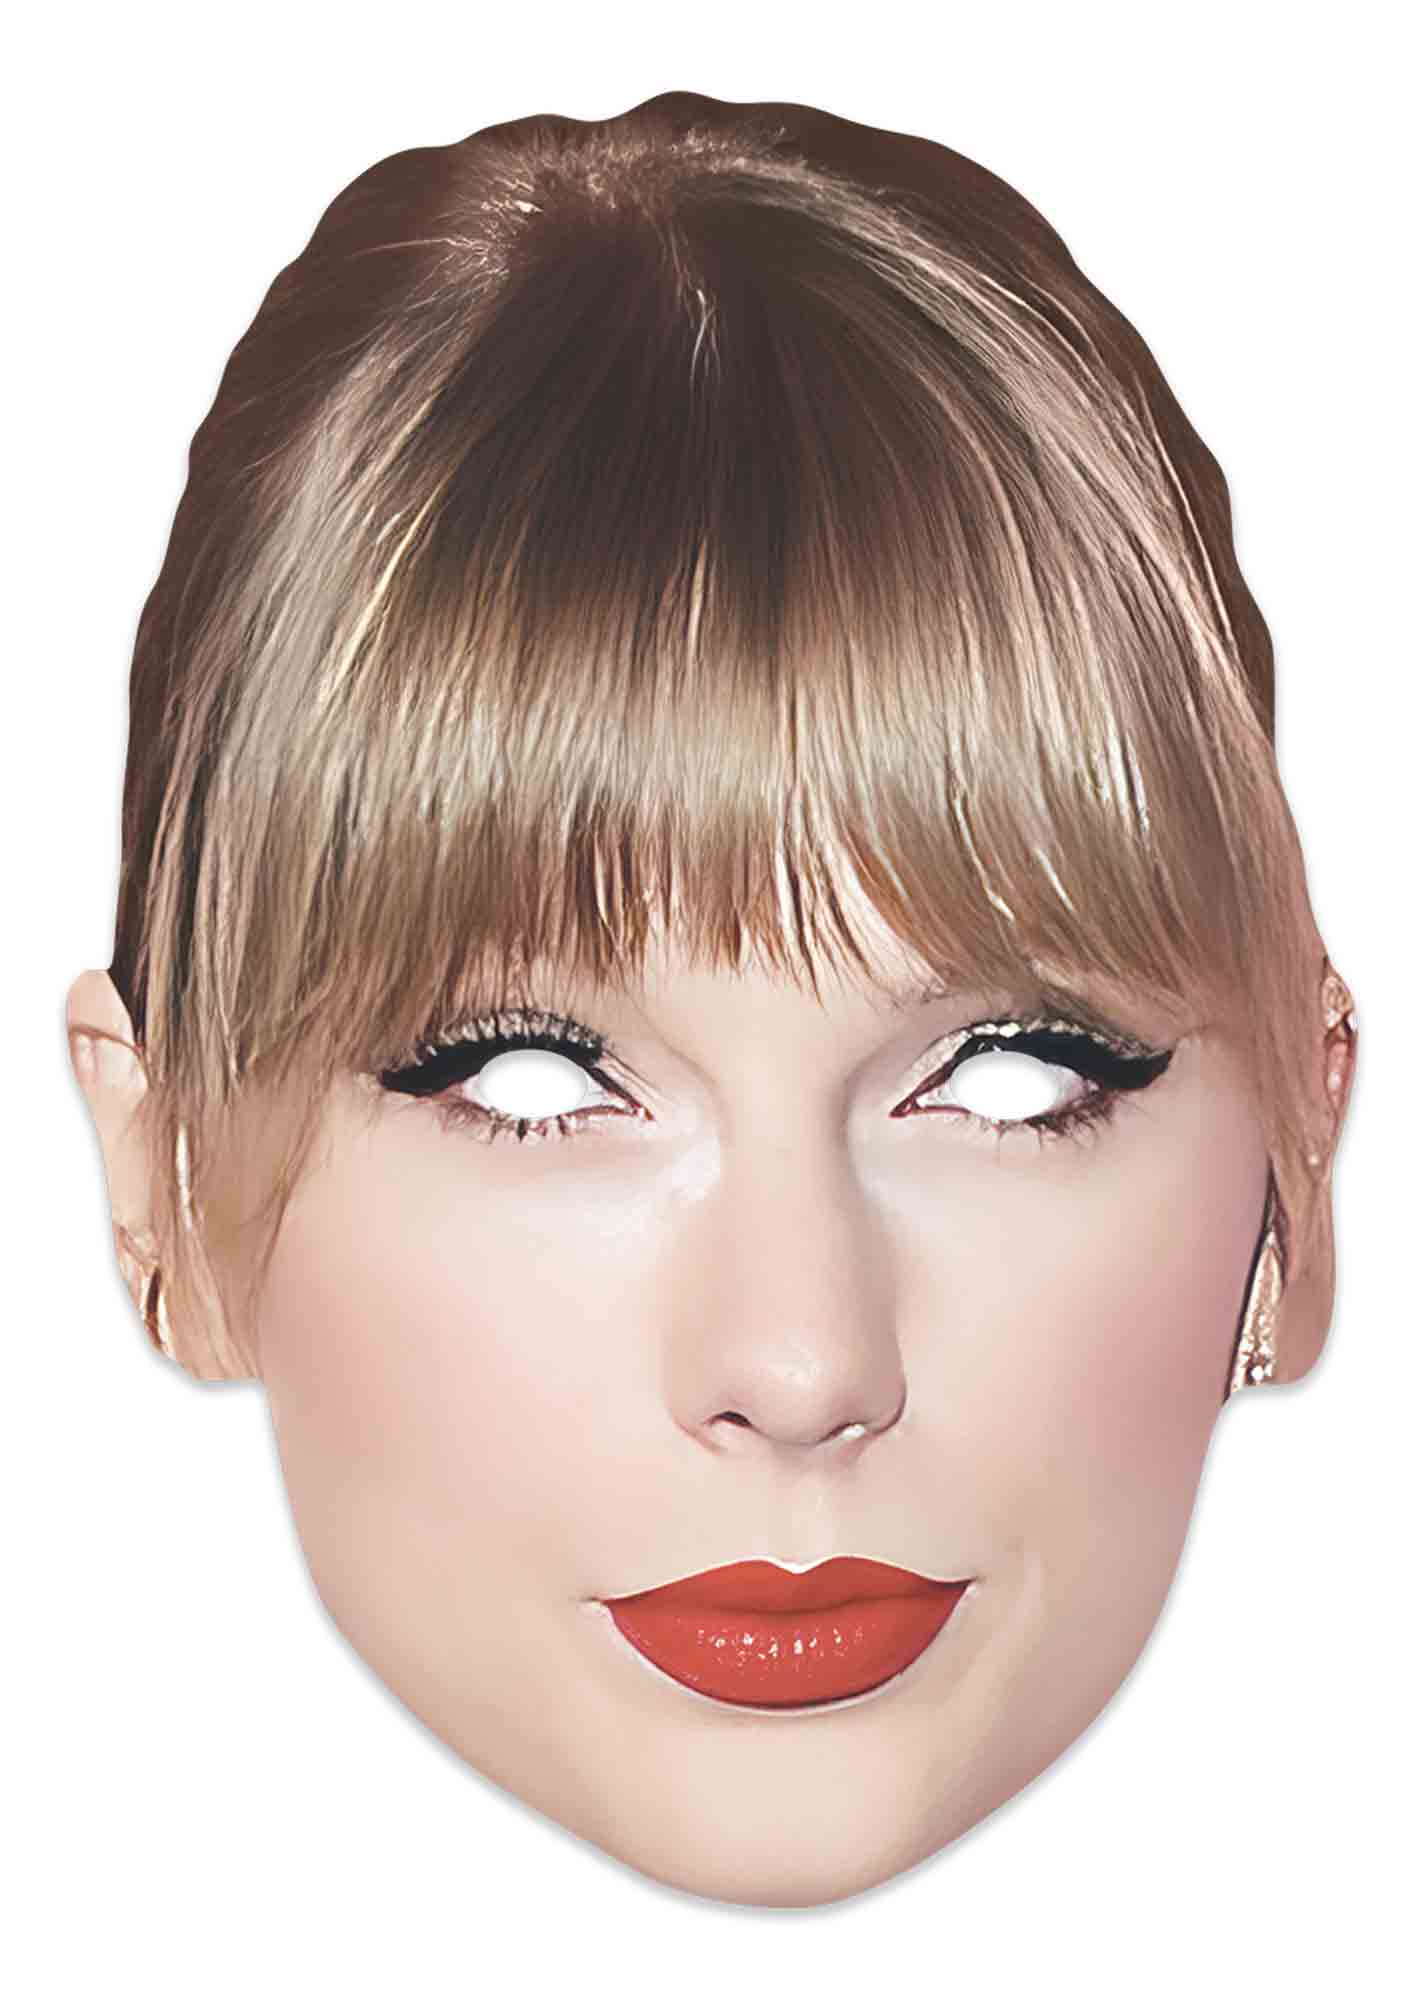 CM249 Taylor Singer Swift  Single Face Mask